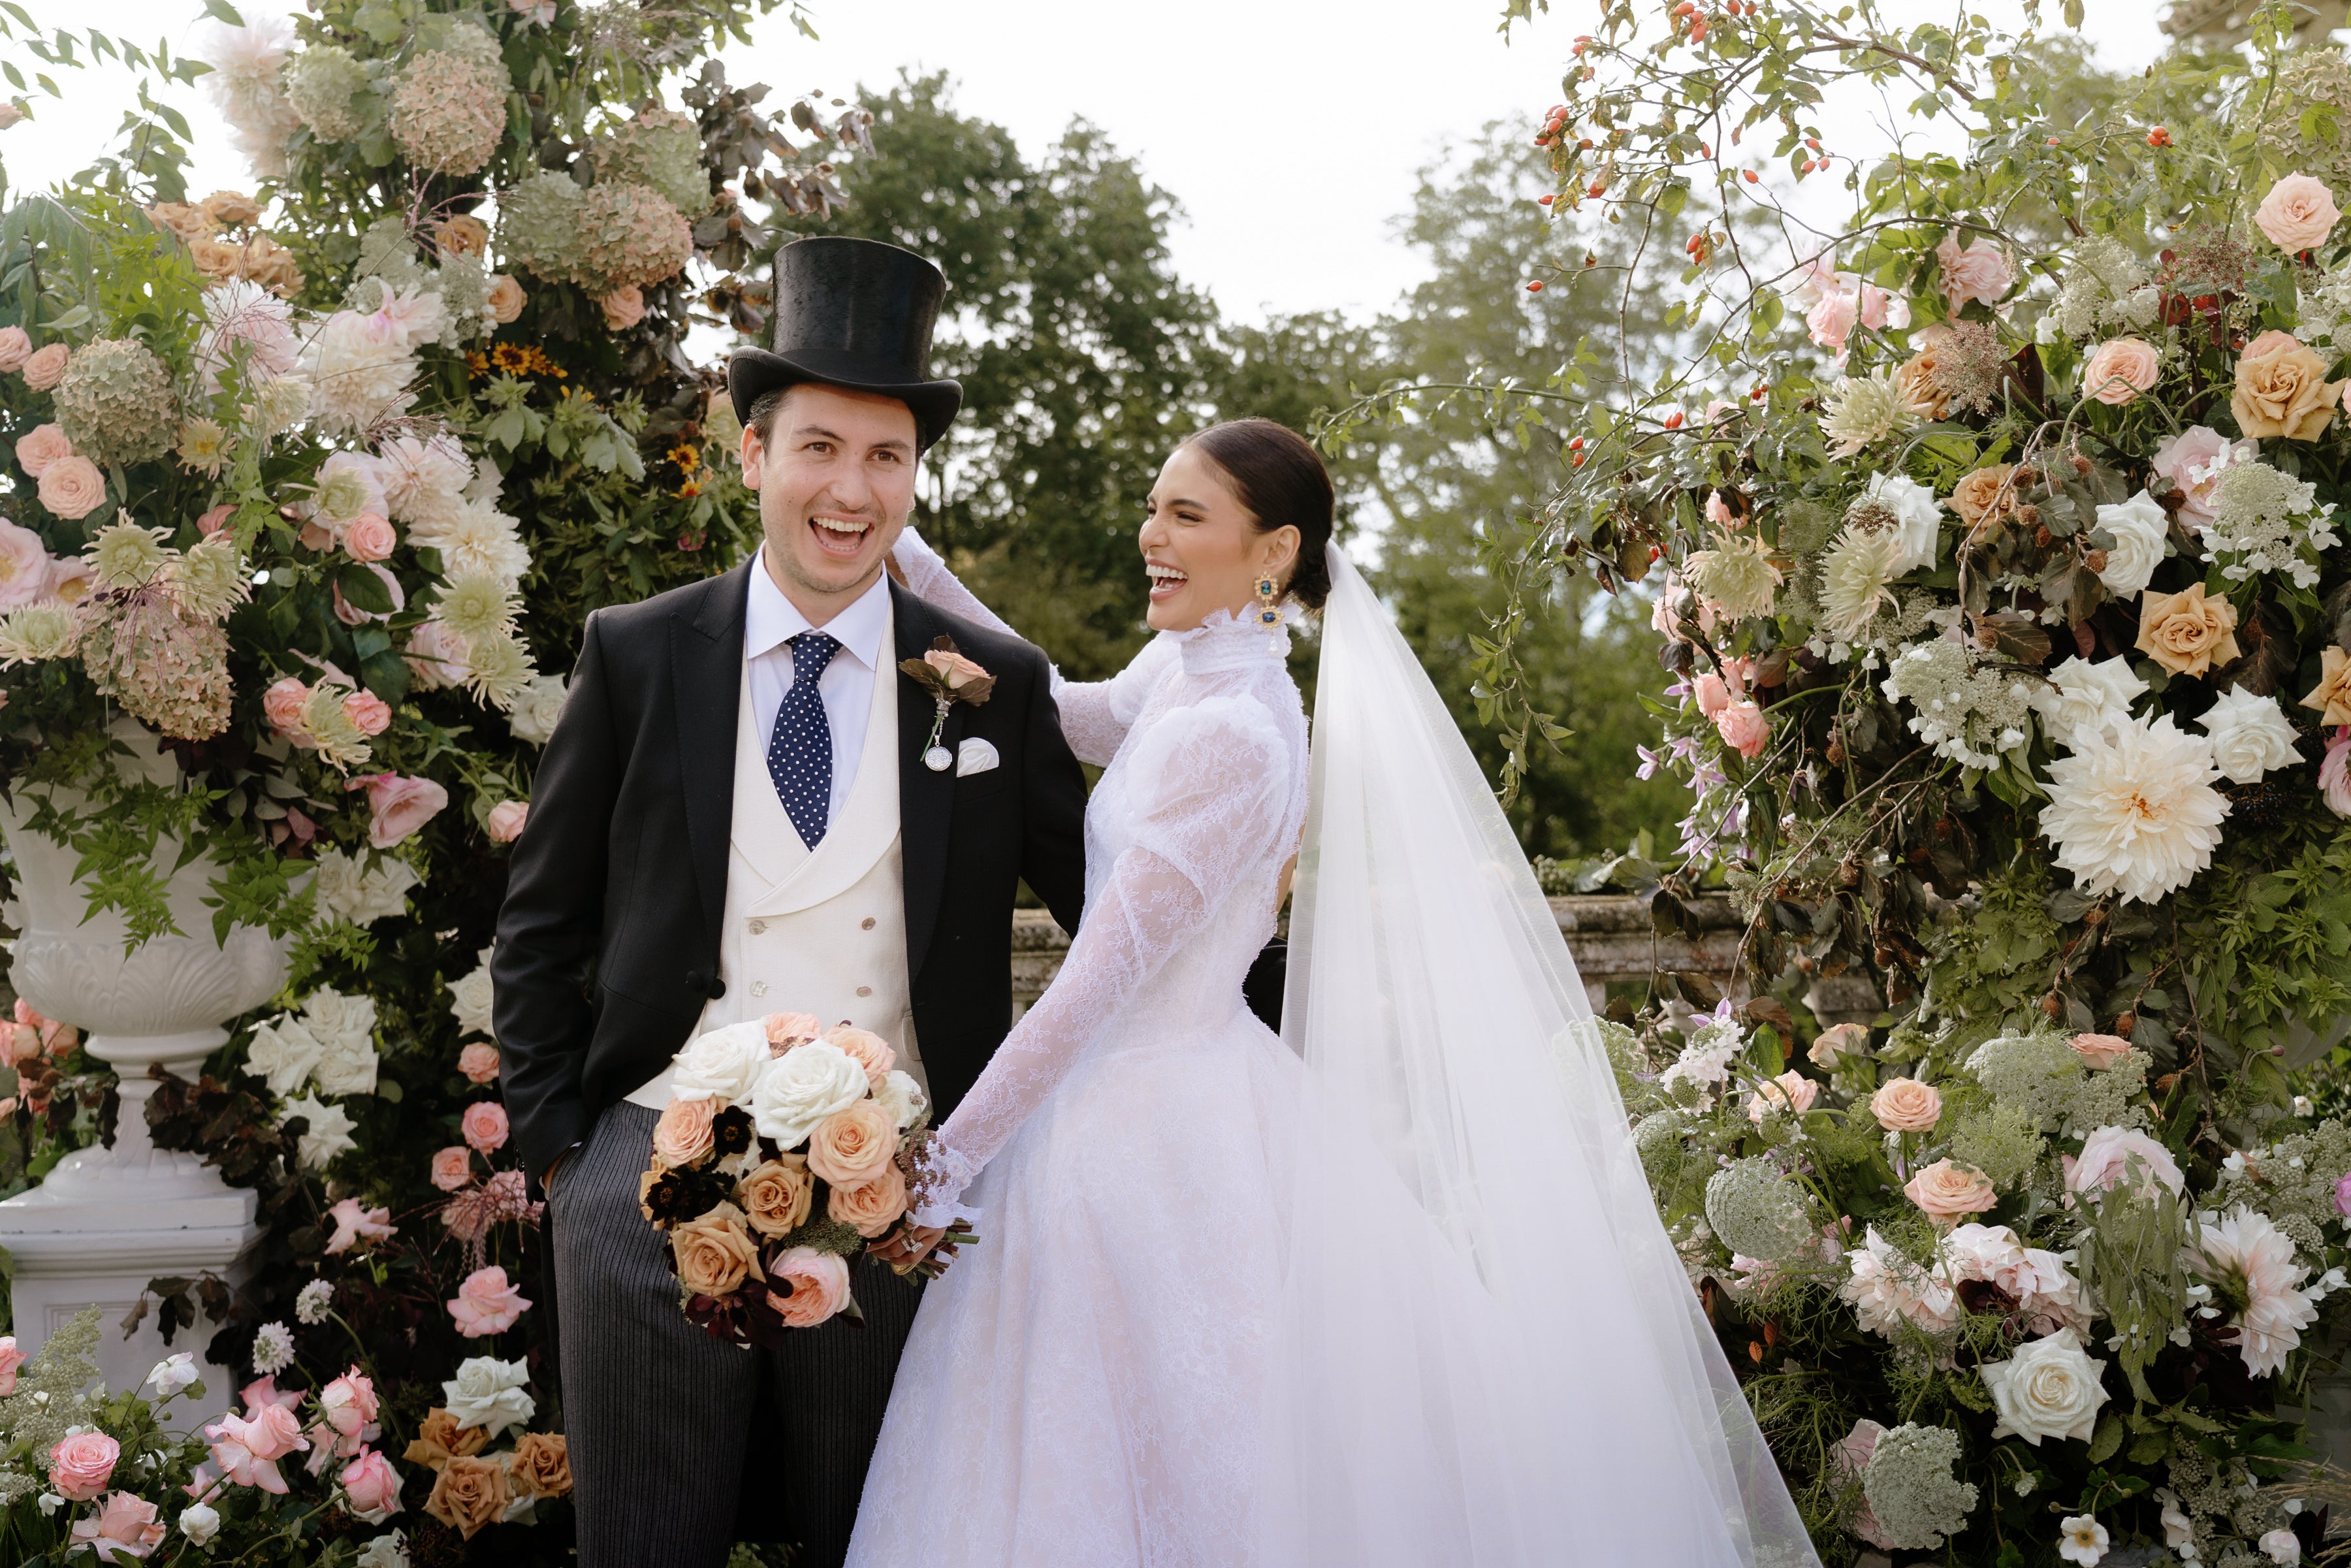 An Awe-Inspiring Wedding at Cliveden House